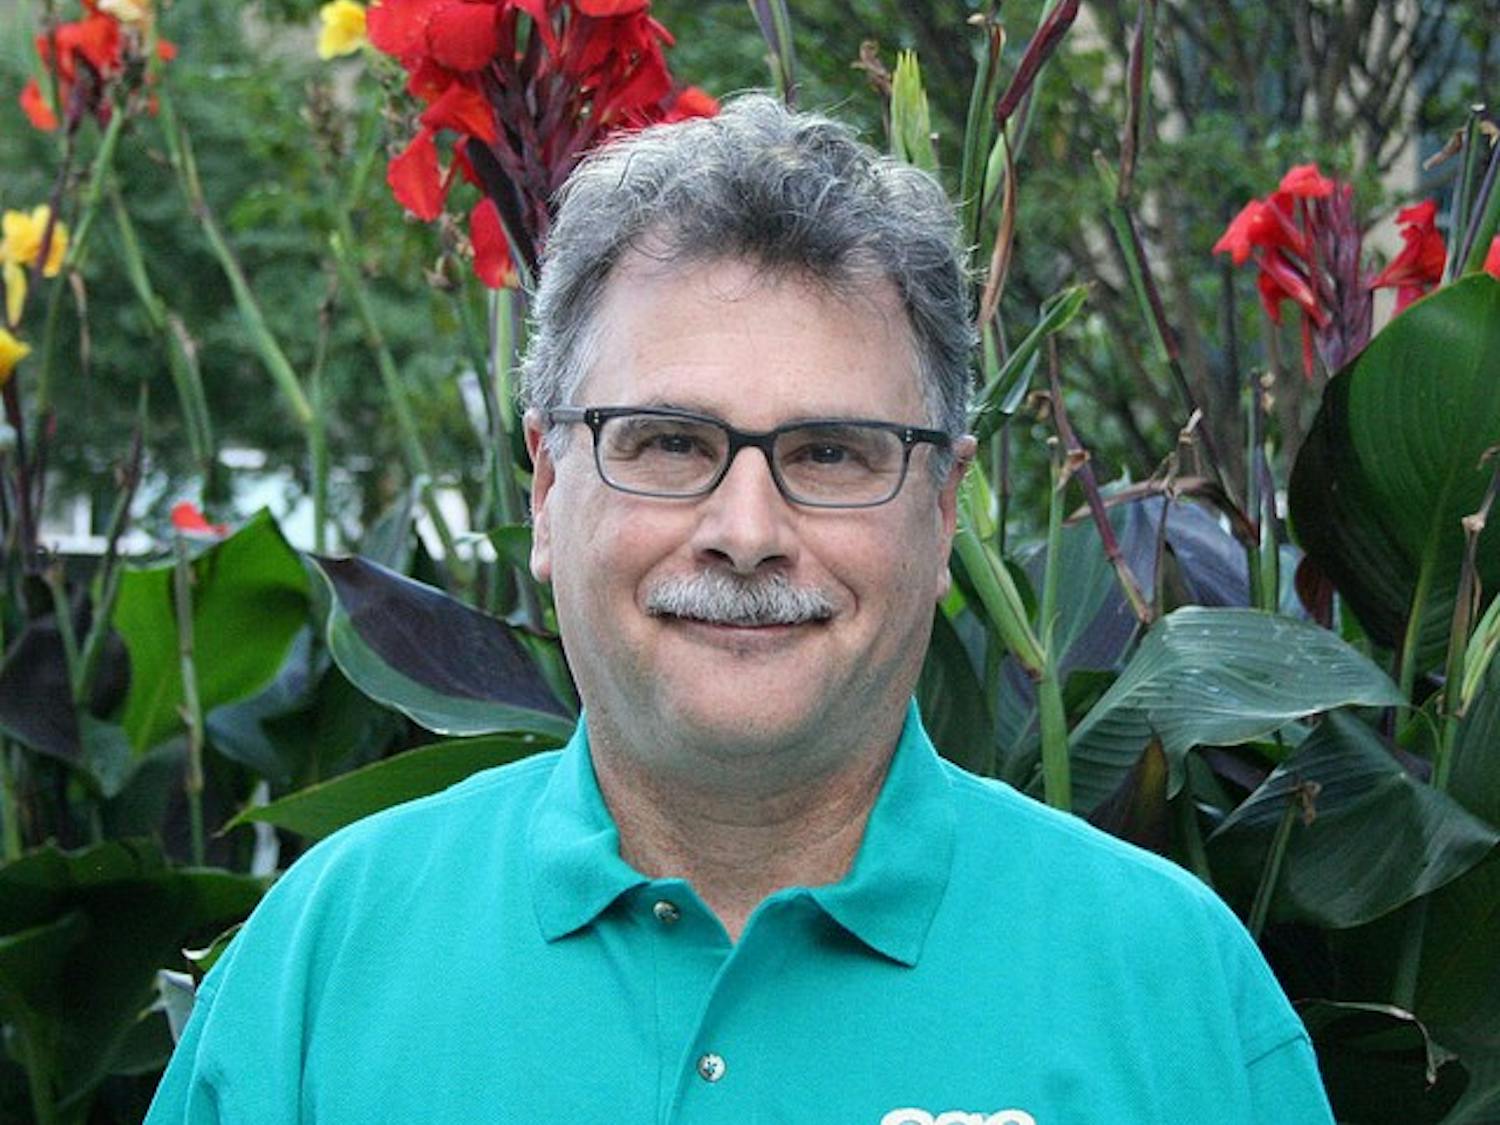 Richard Pouyat, president of the Ecological Society of America